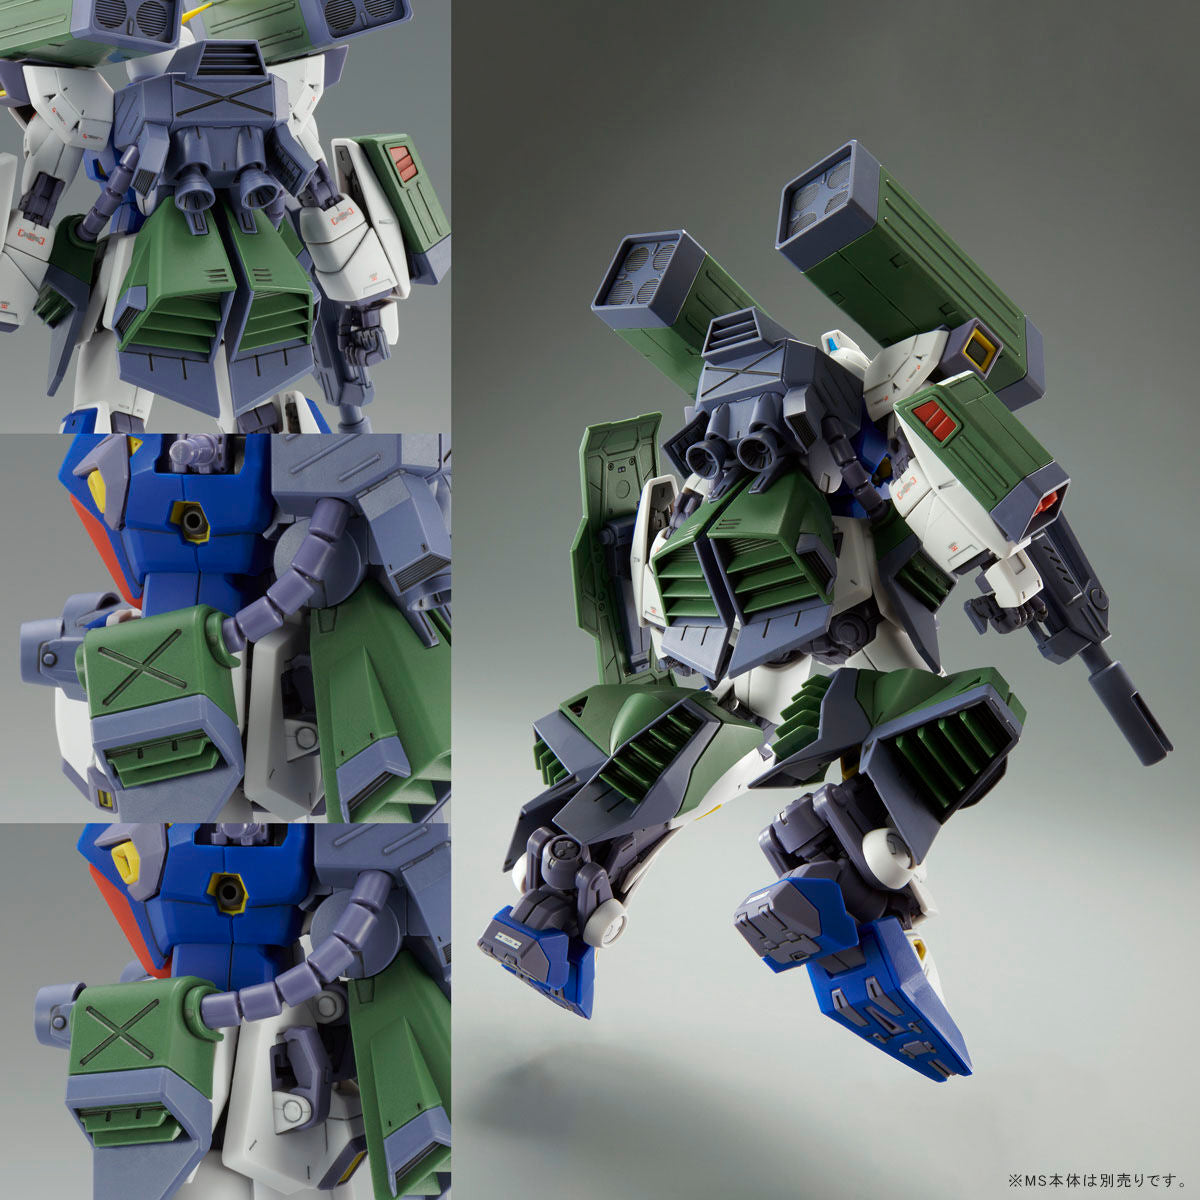 MG 1/100 MG 1/100 Gundam F90 Mission Pack H Type - P-Bandai